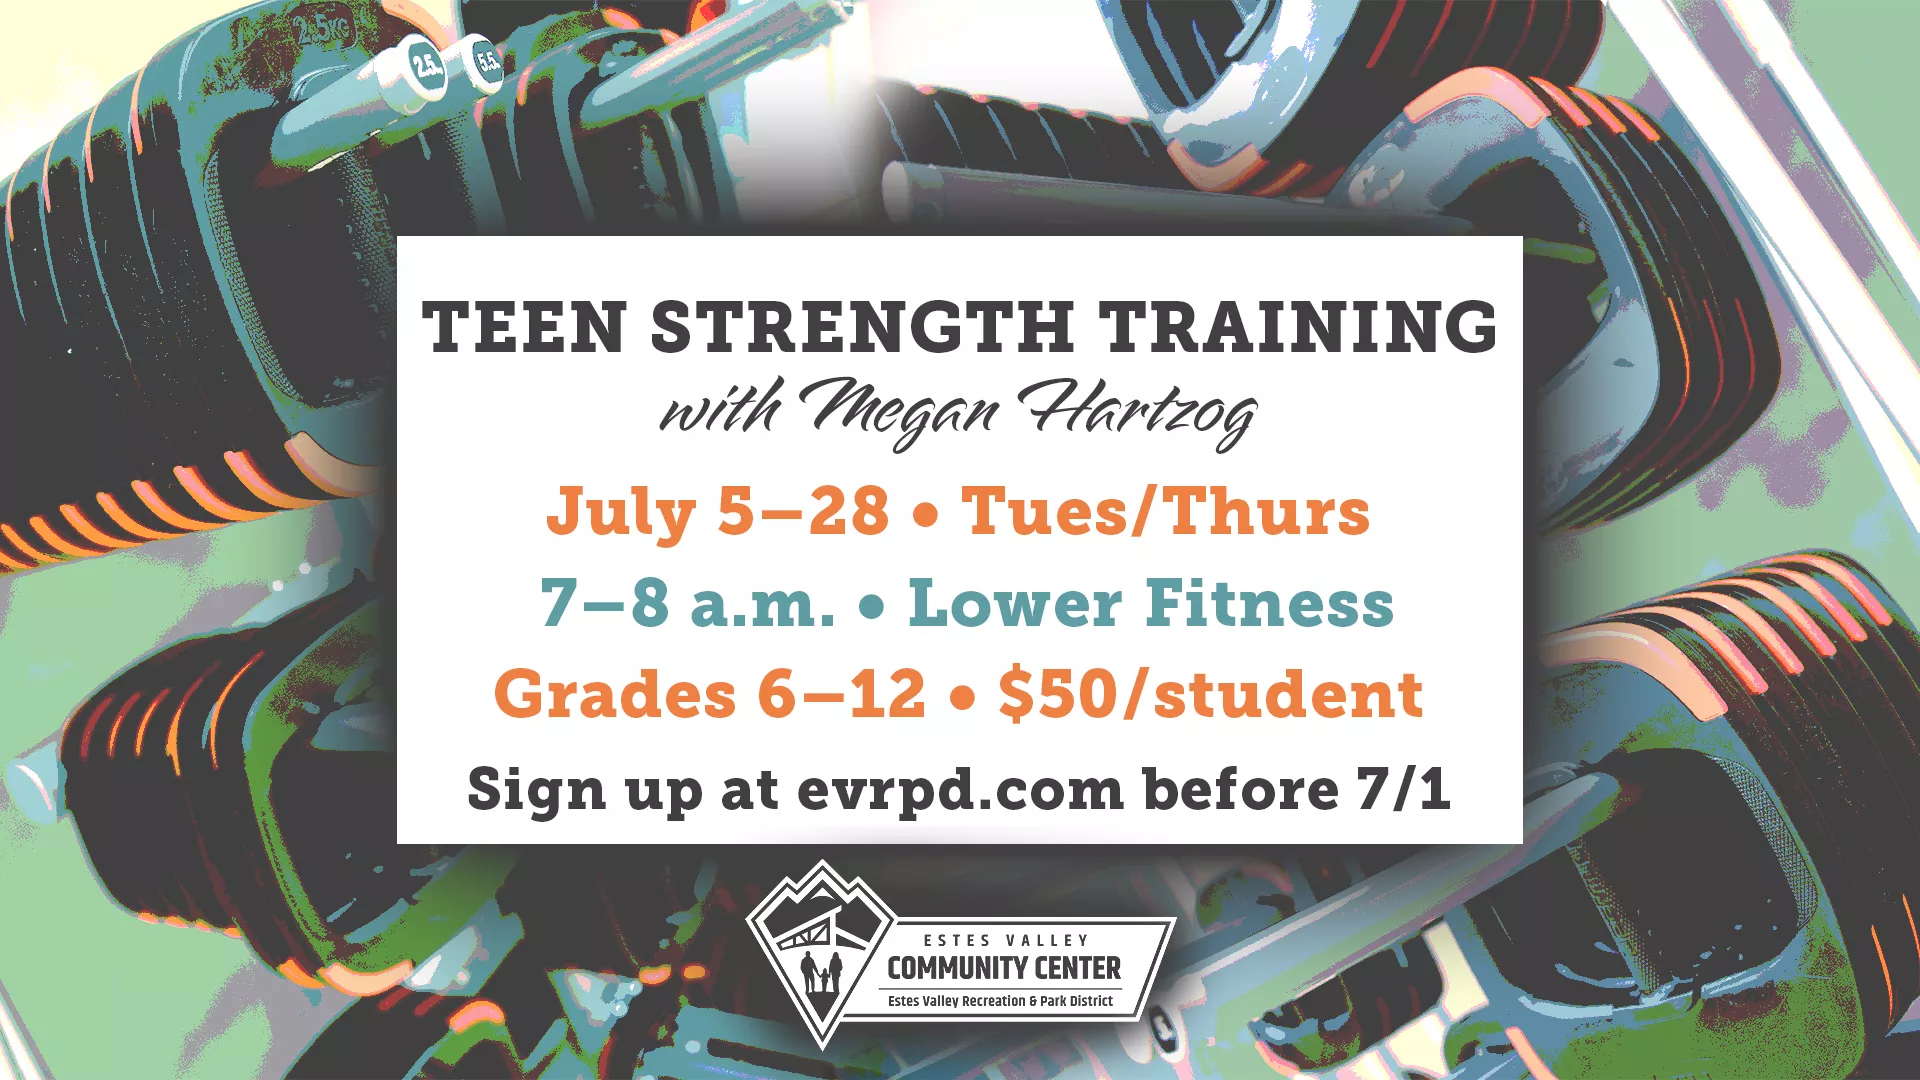 Teen Strength Training with Megan Hartzog